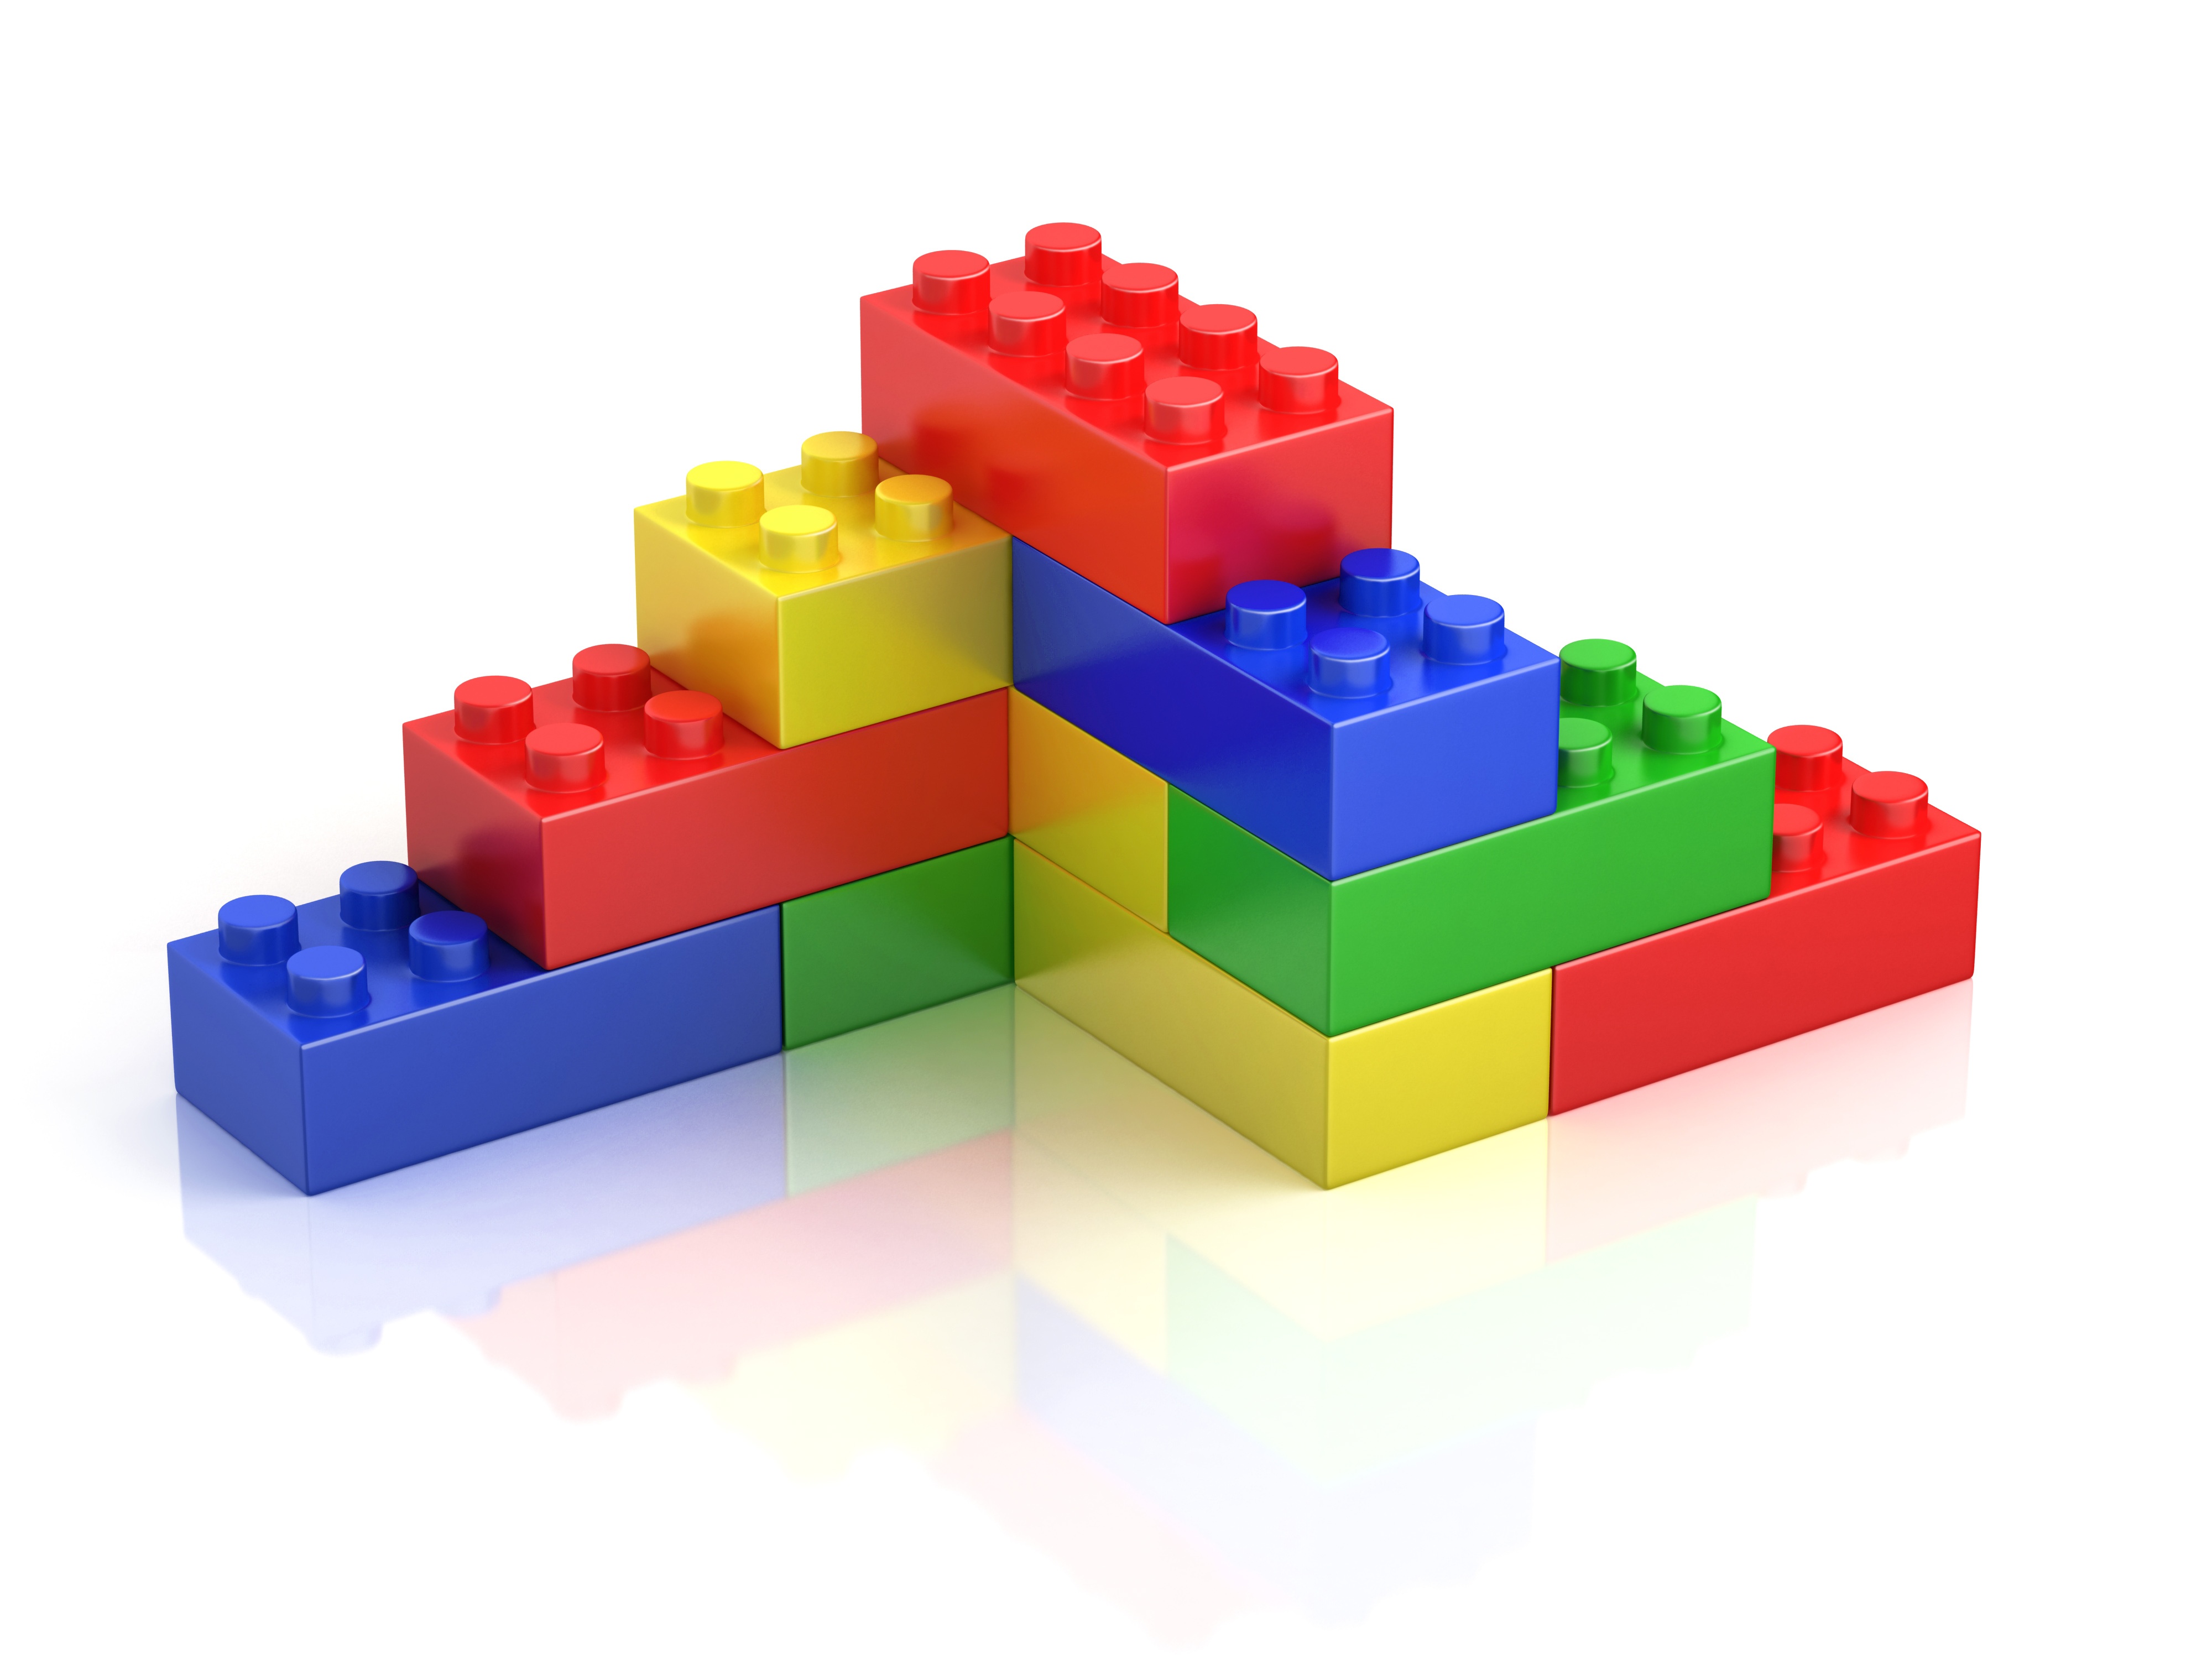 insights lego blocks